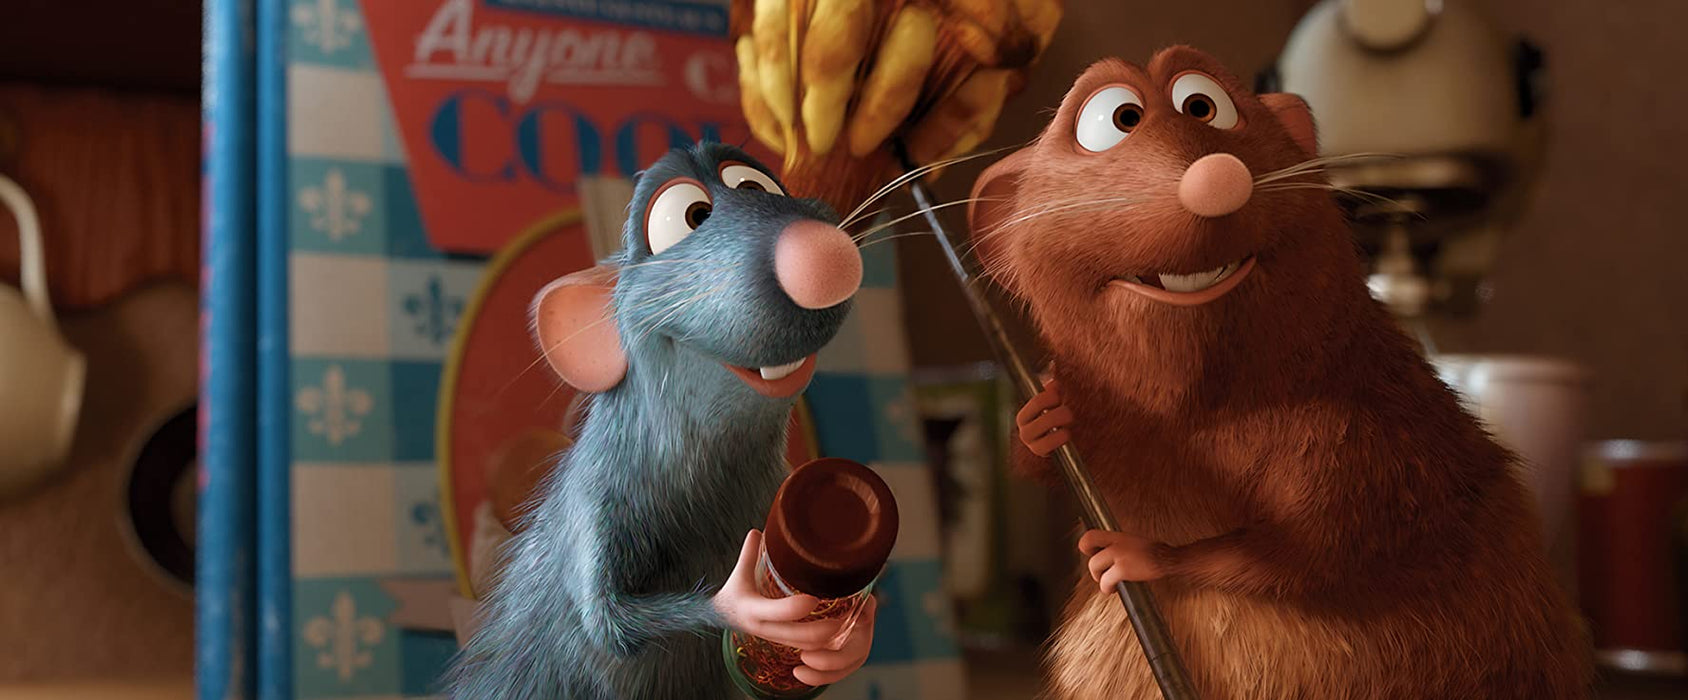 Disney Pixar's Ratatouille [Blu-ray]